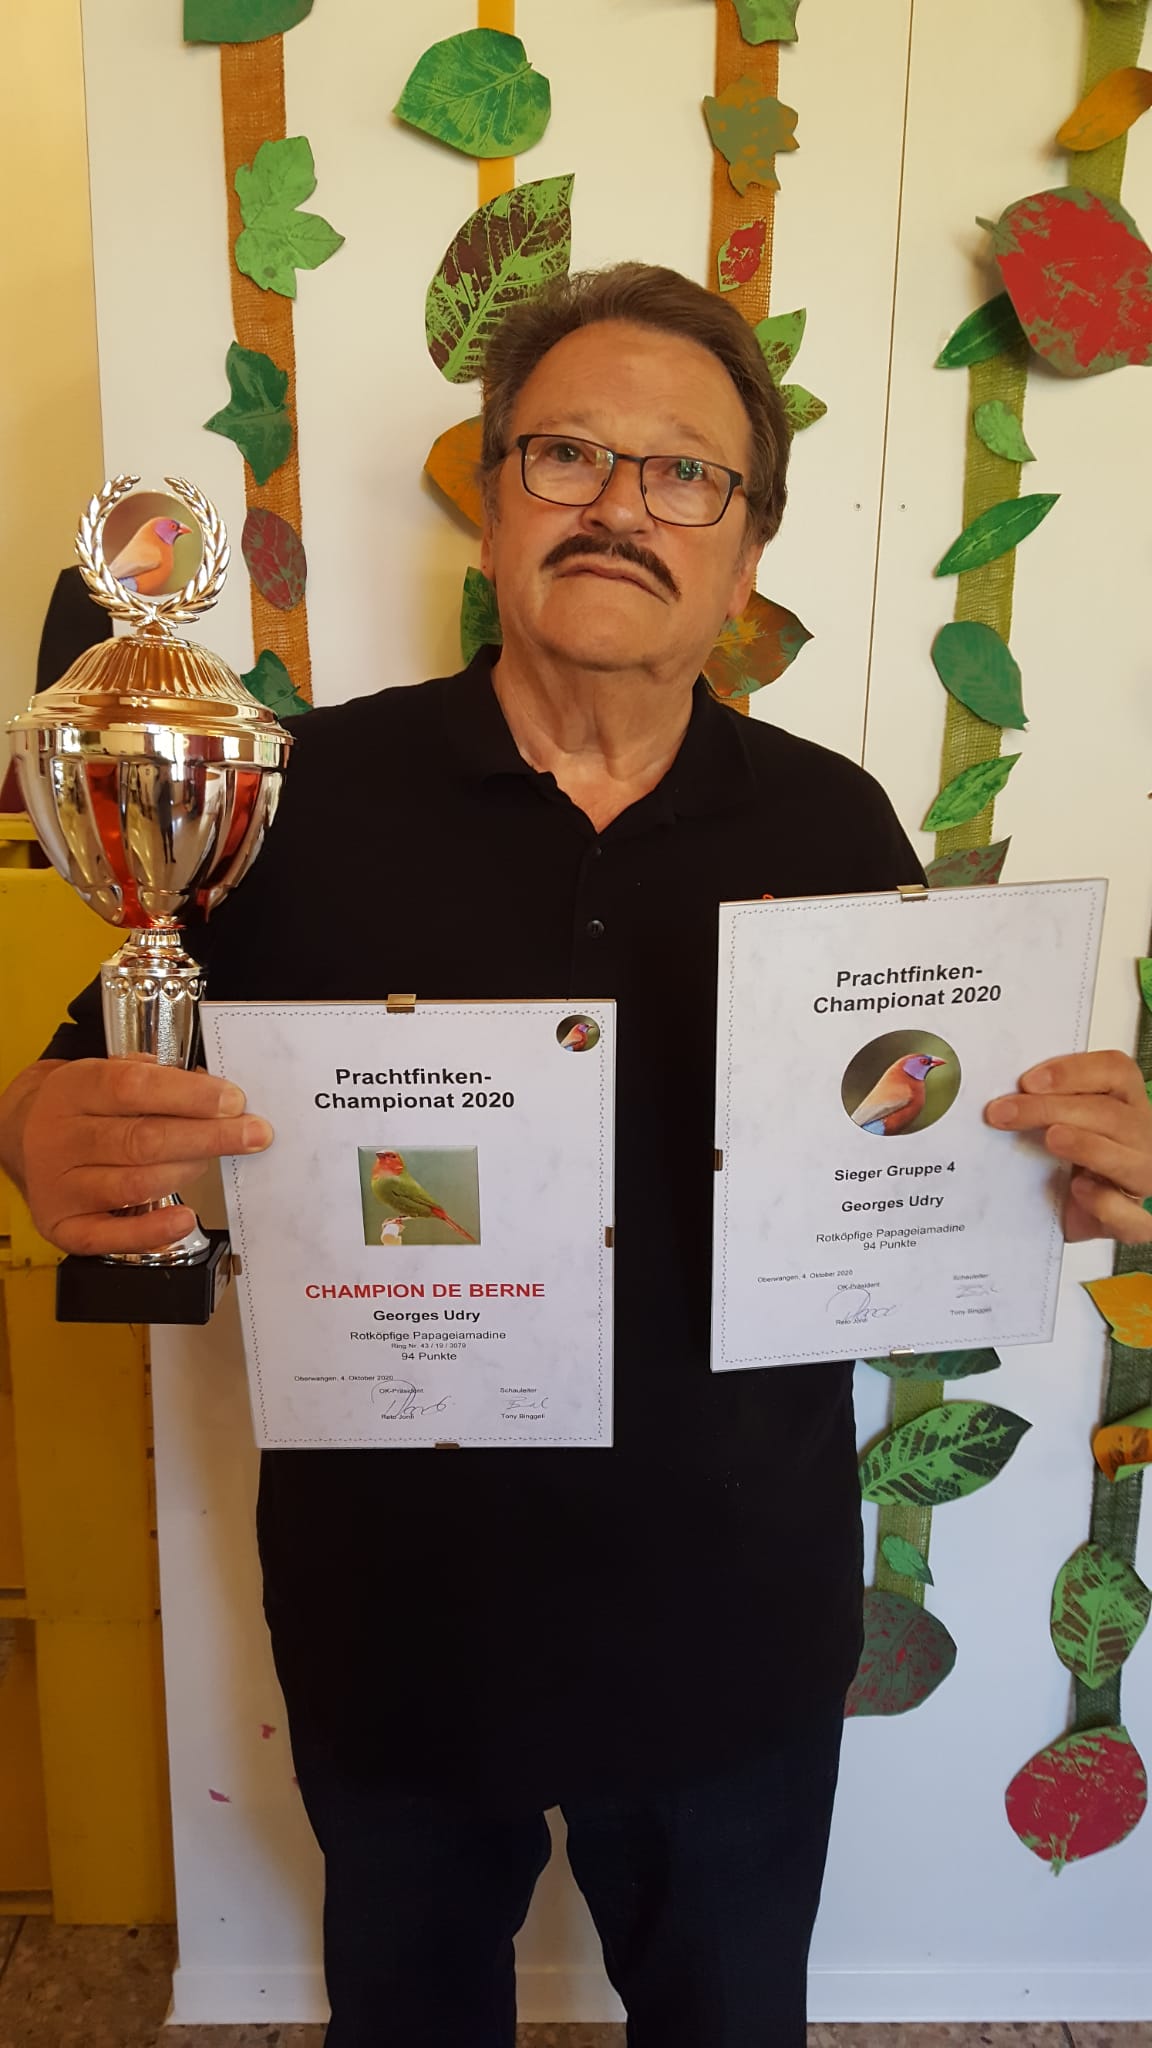 Georges Udry, Champion Gouldamadinen- und Prachtfinkenchampionat